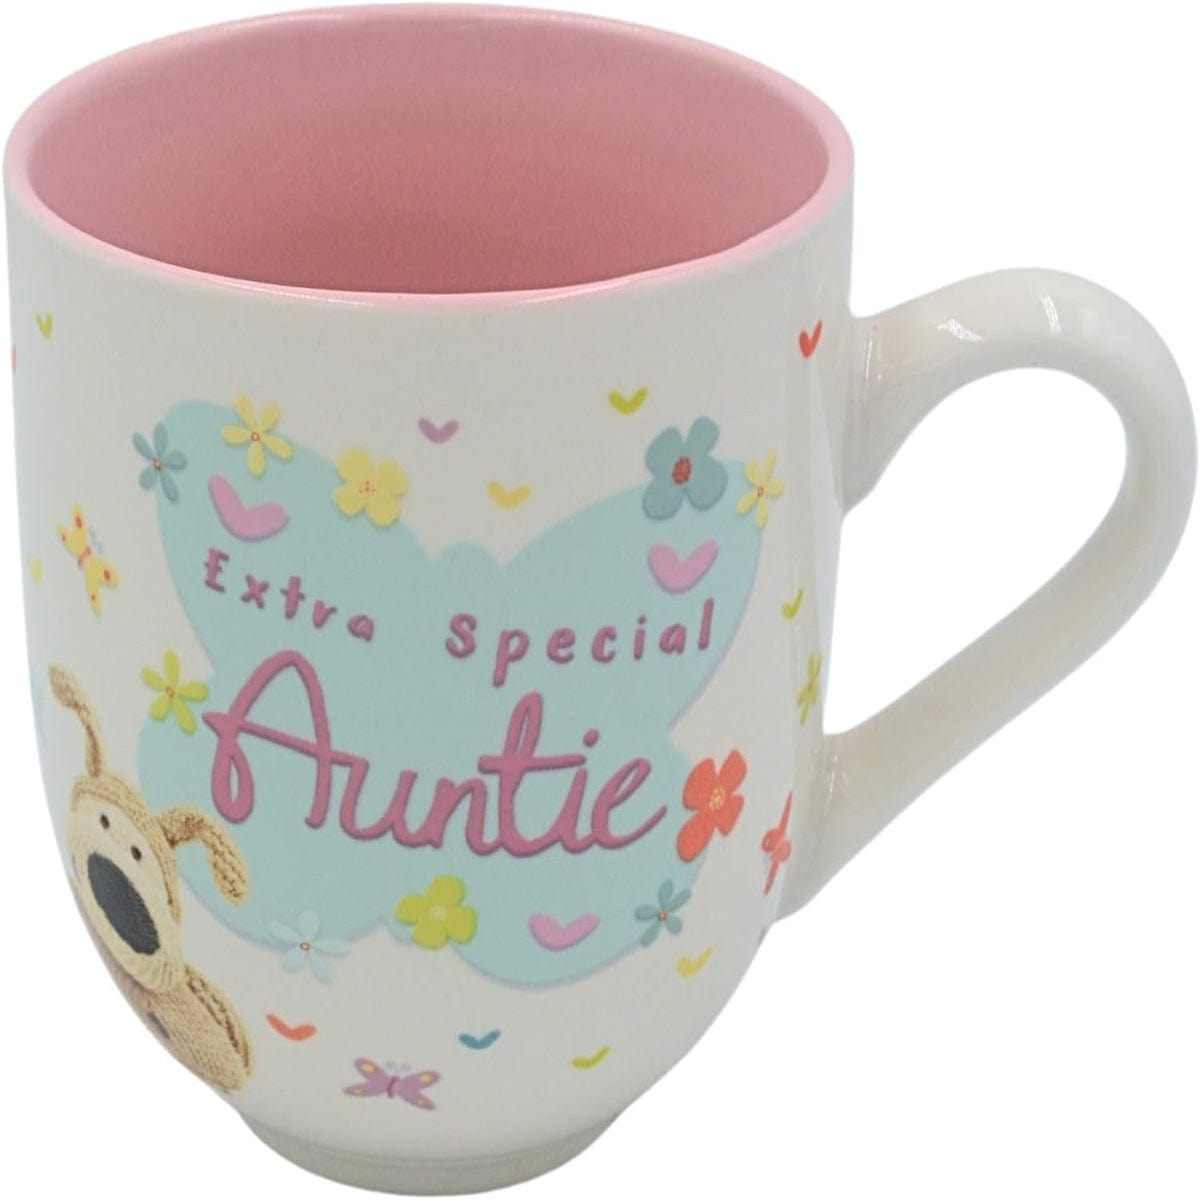 Joe Davies Mugs Boofle Extra Special Auntie Gift Mug